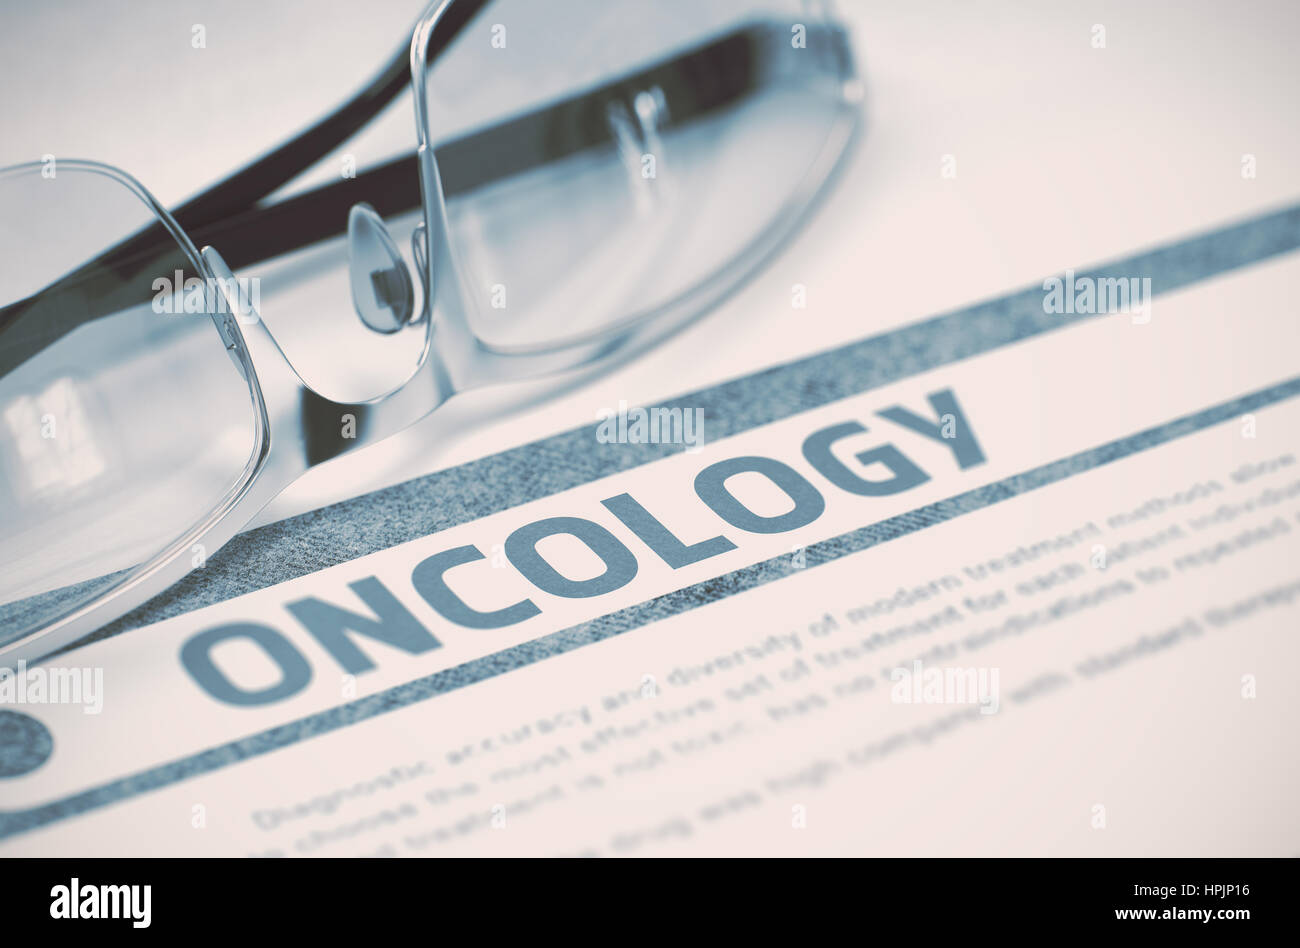 Diagnosis - Oncology. Medicine Concept. 3D Illustration. Stock Photo